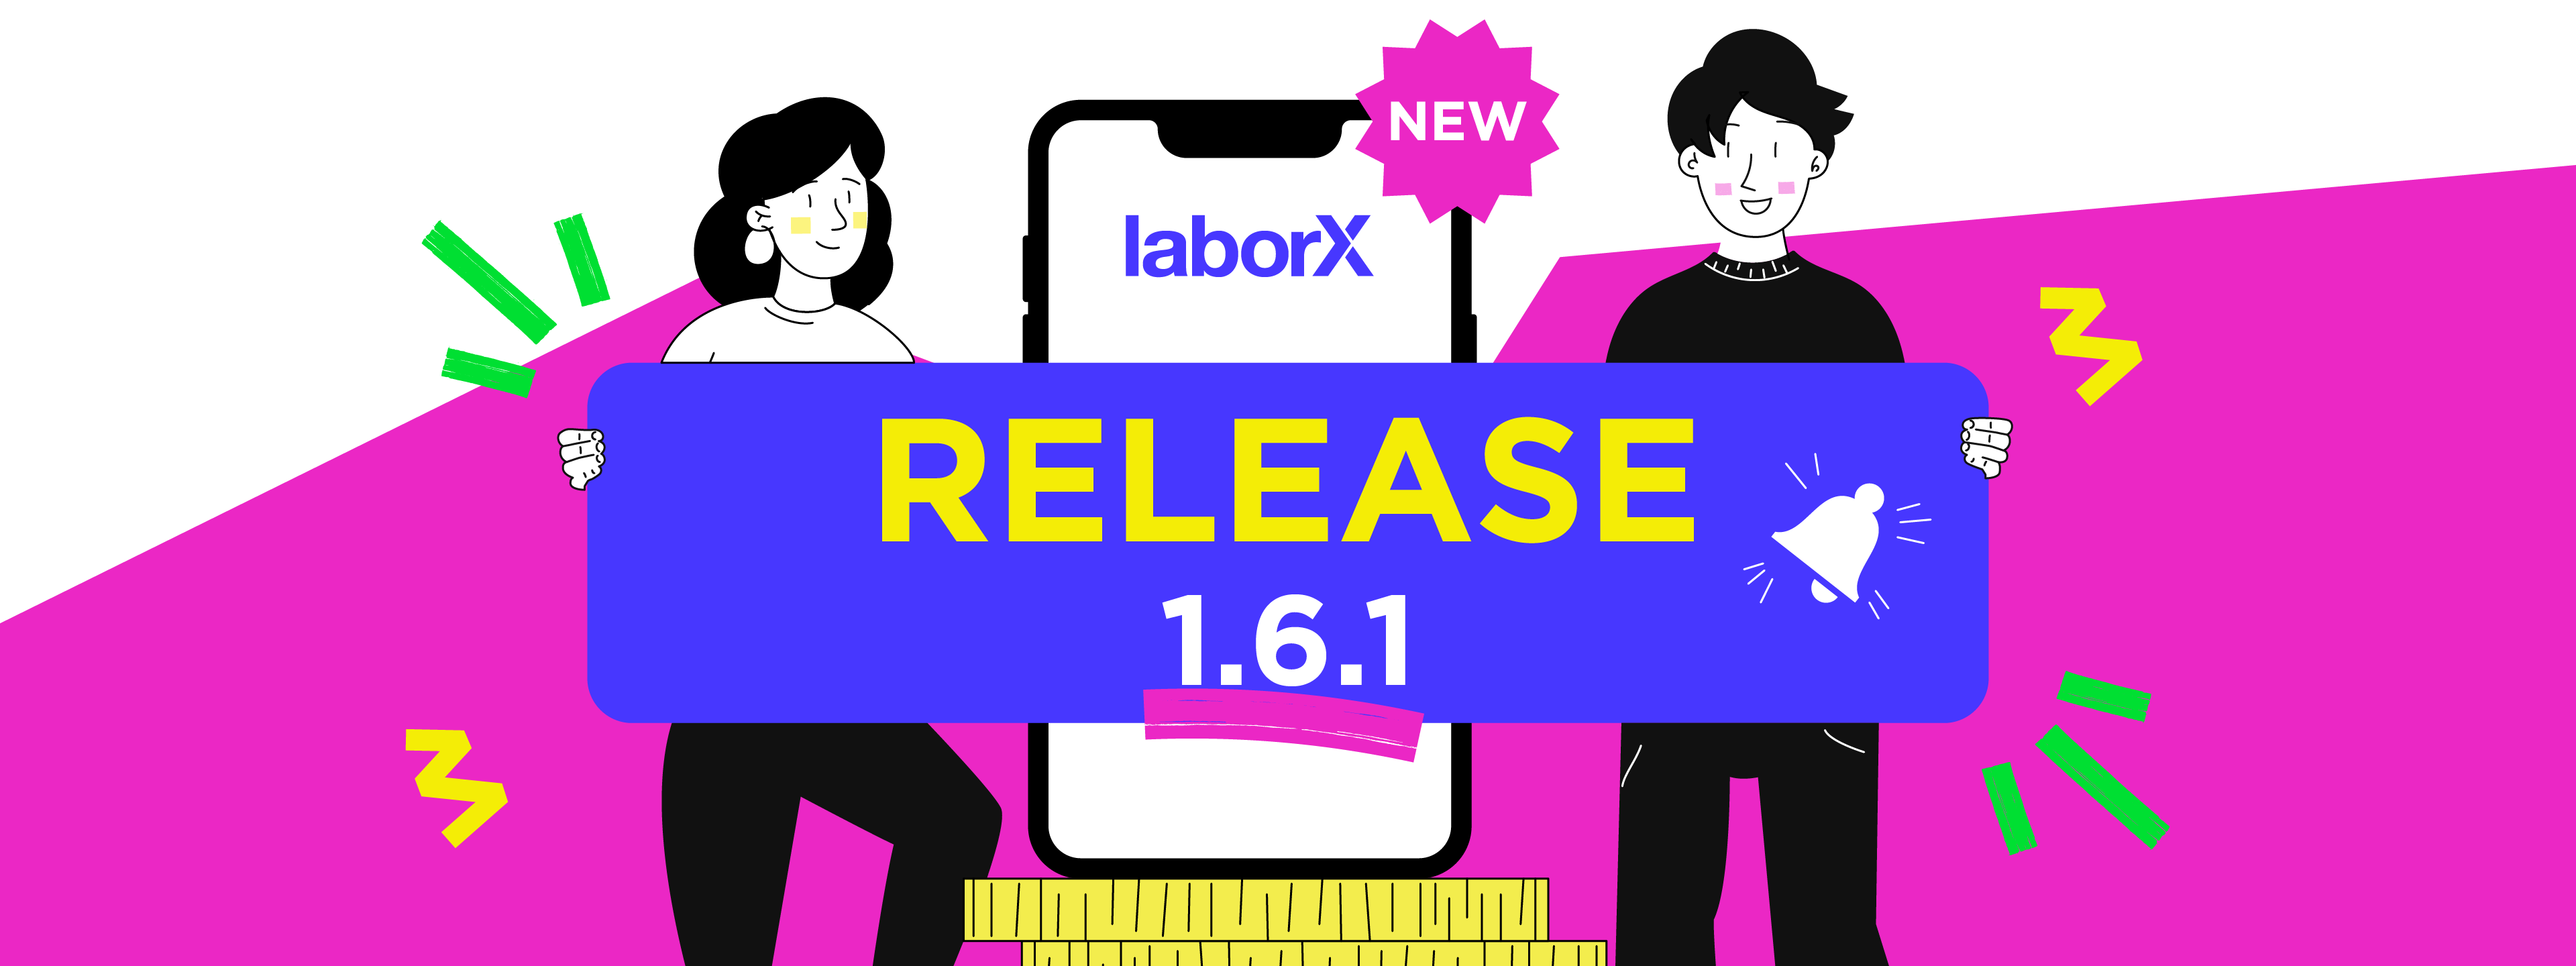 Announcing LaborX Release 1.6.1!